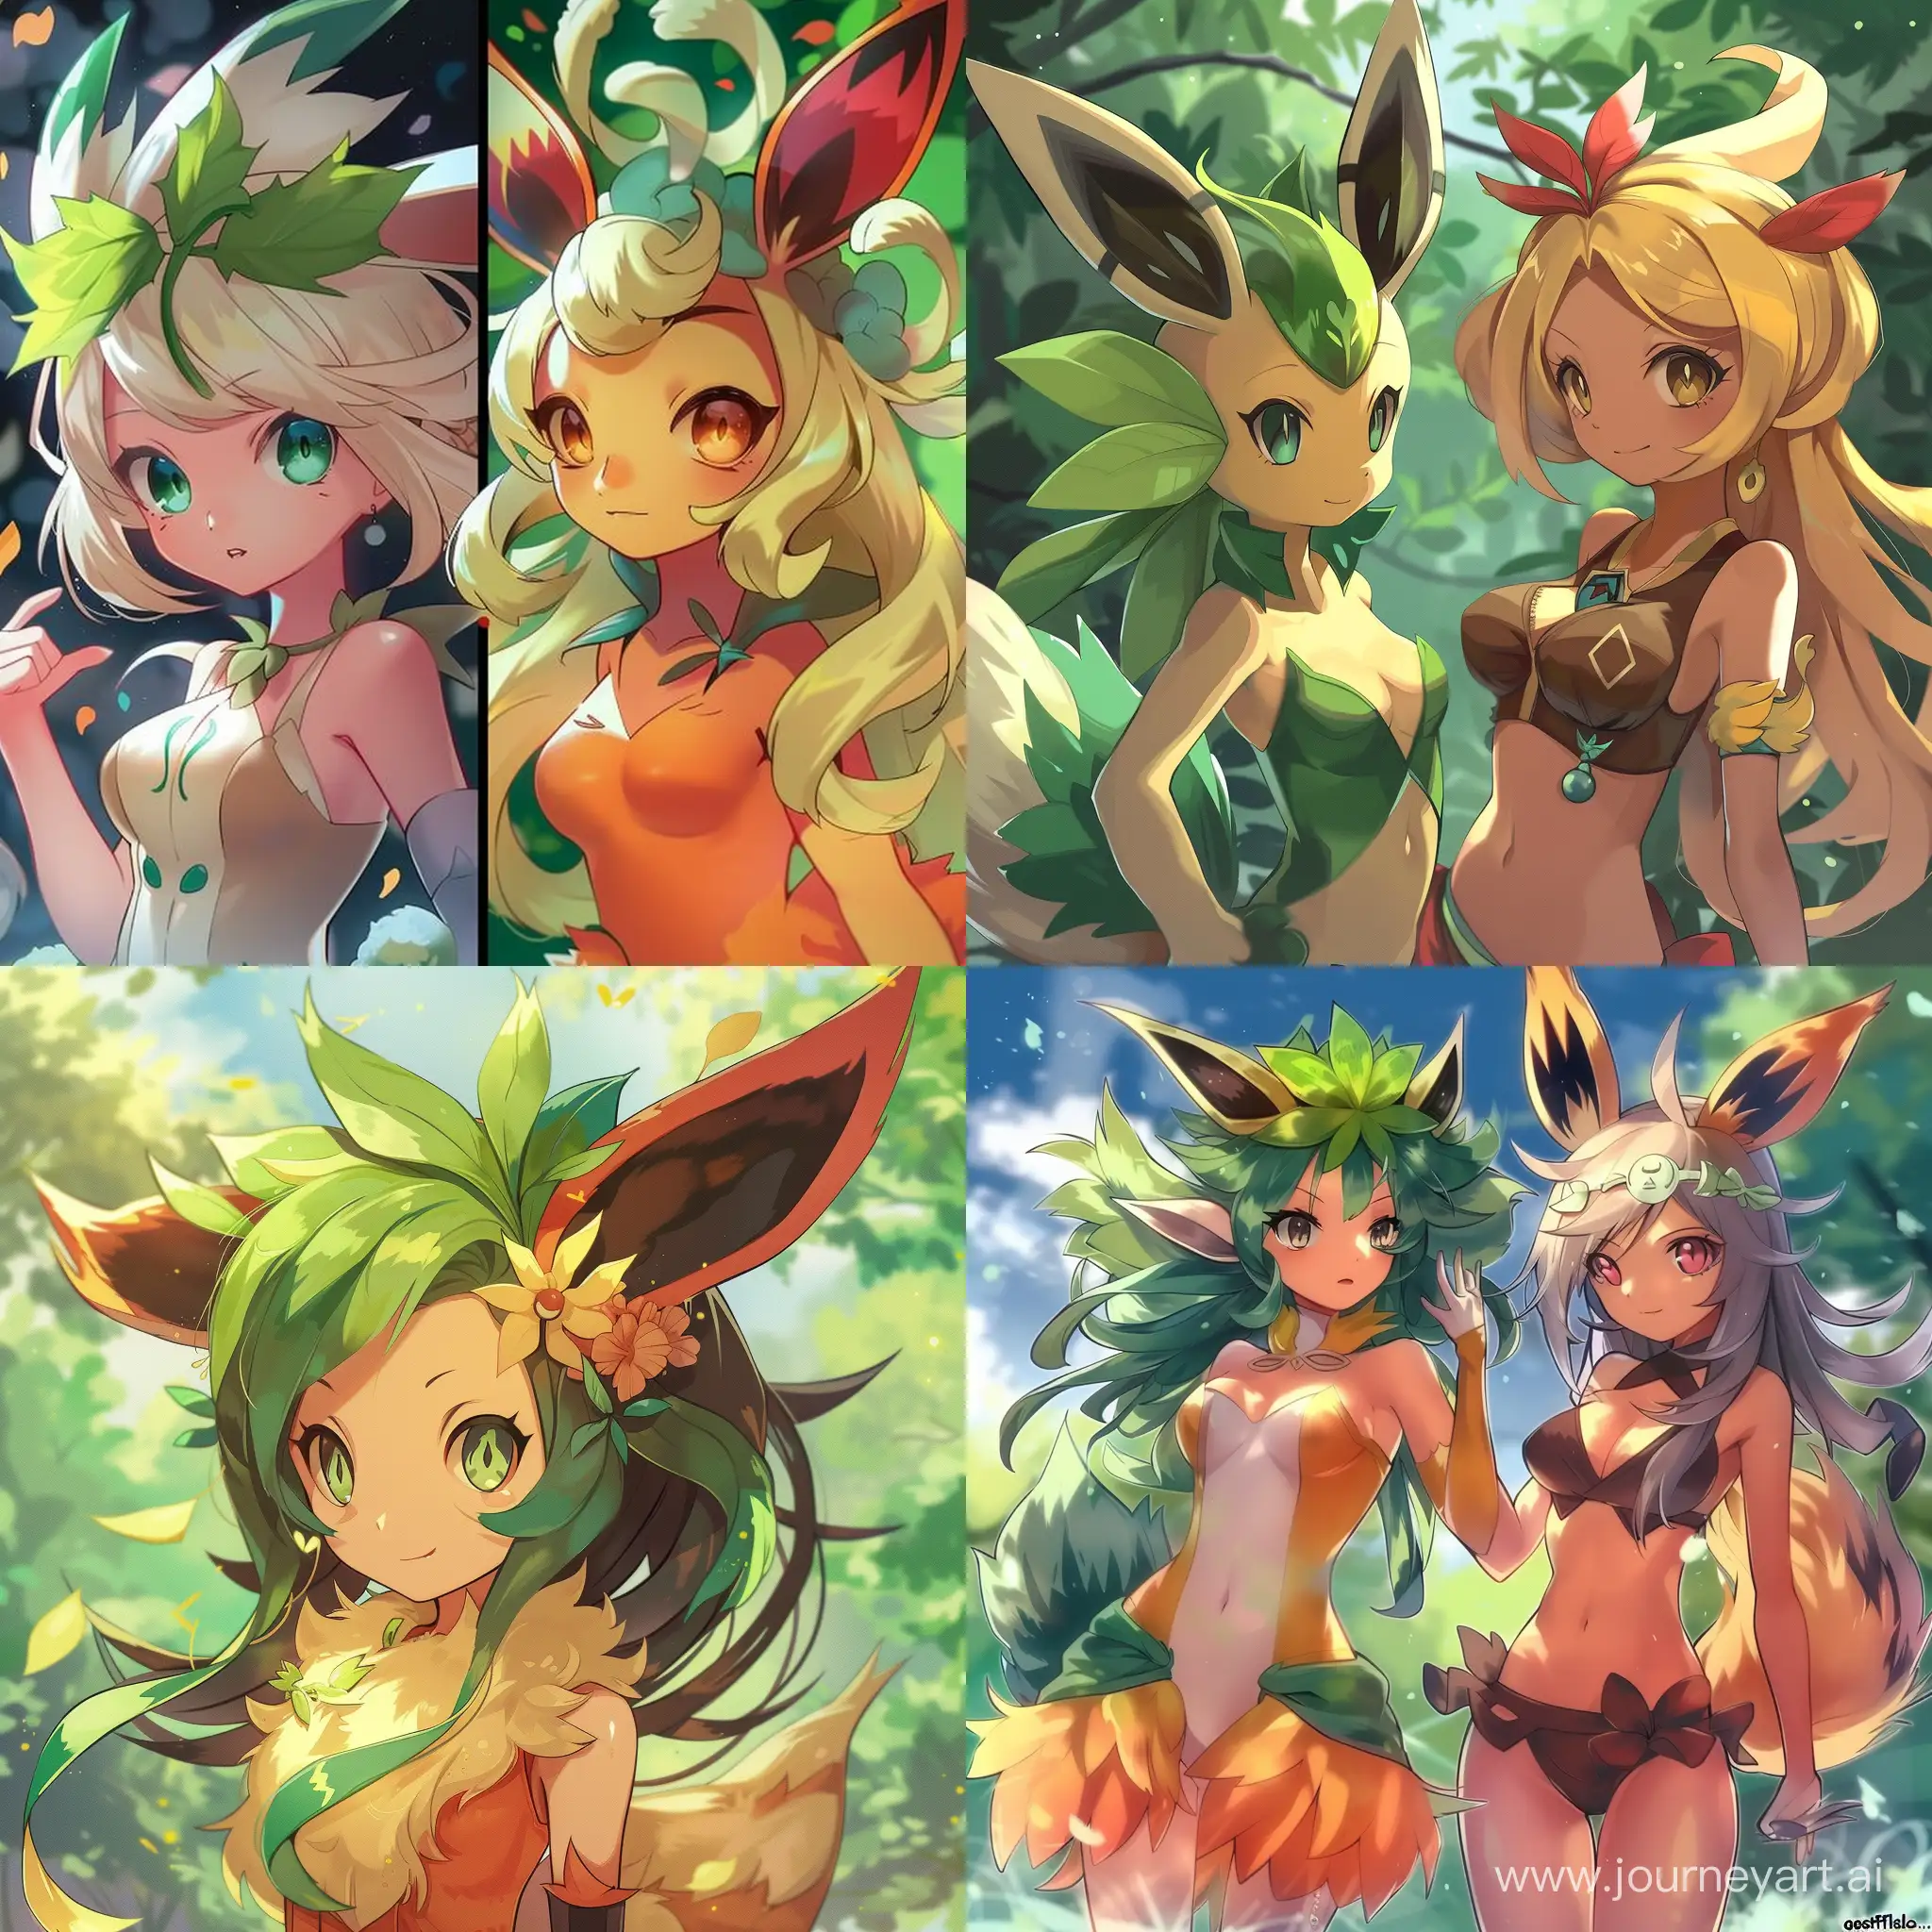 Adorable-Anime-Girl-Fusion-of-Leafeon-and-Gossifleur-Pokemons